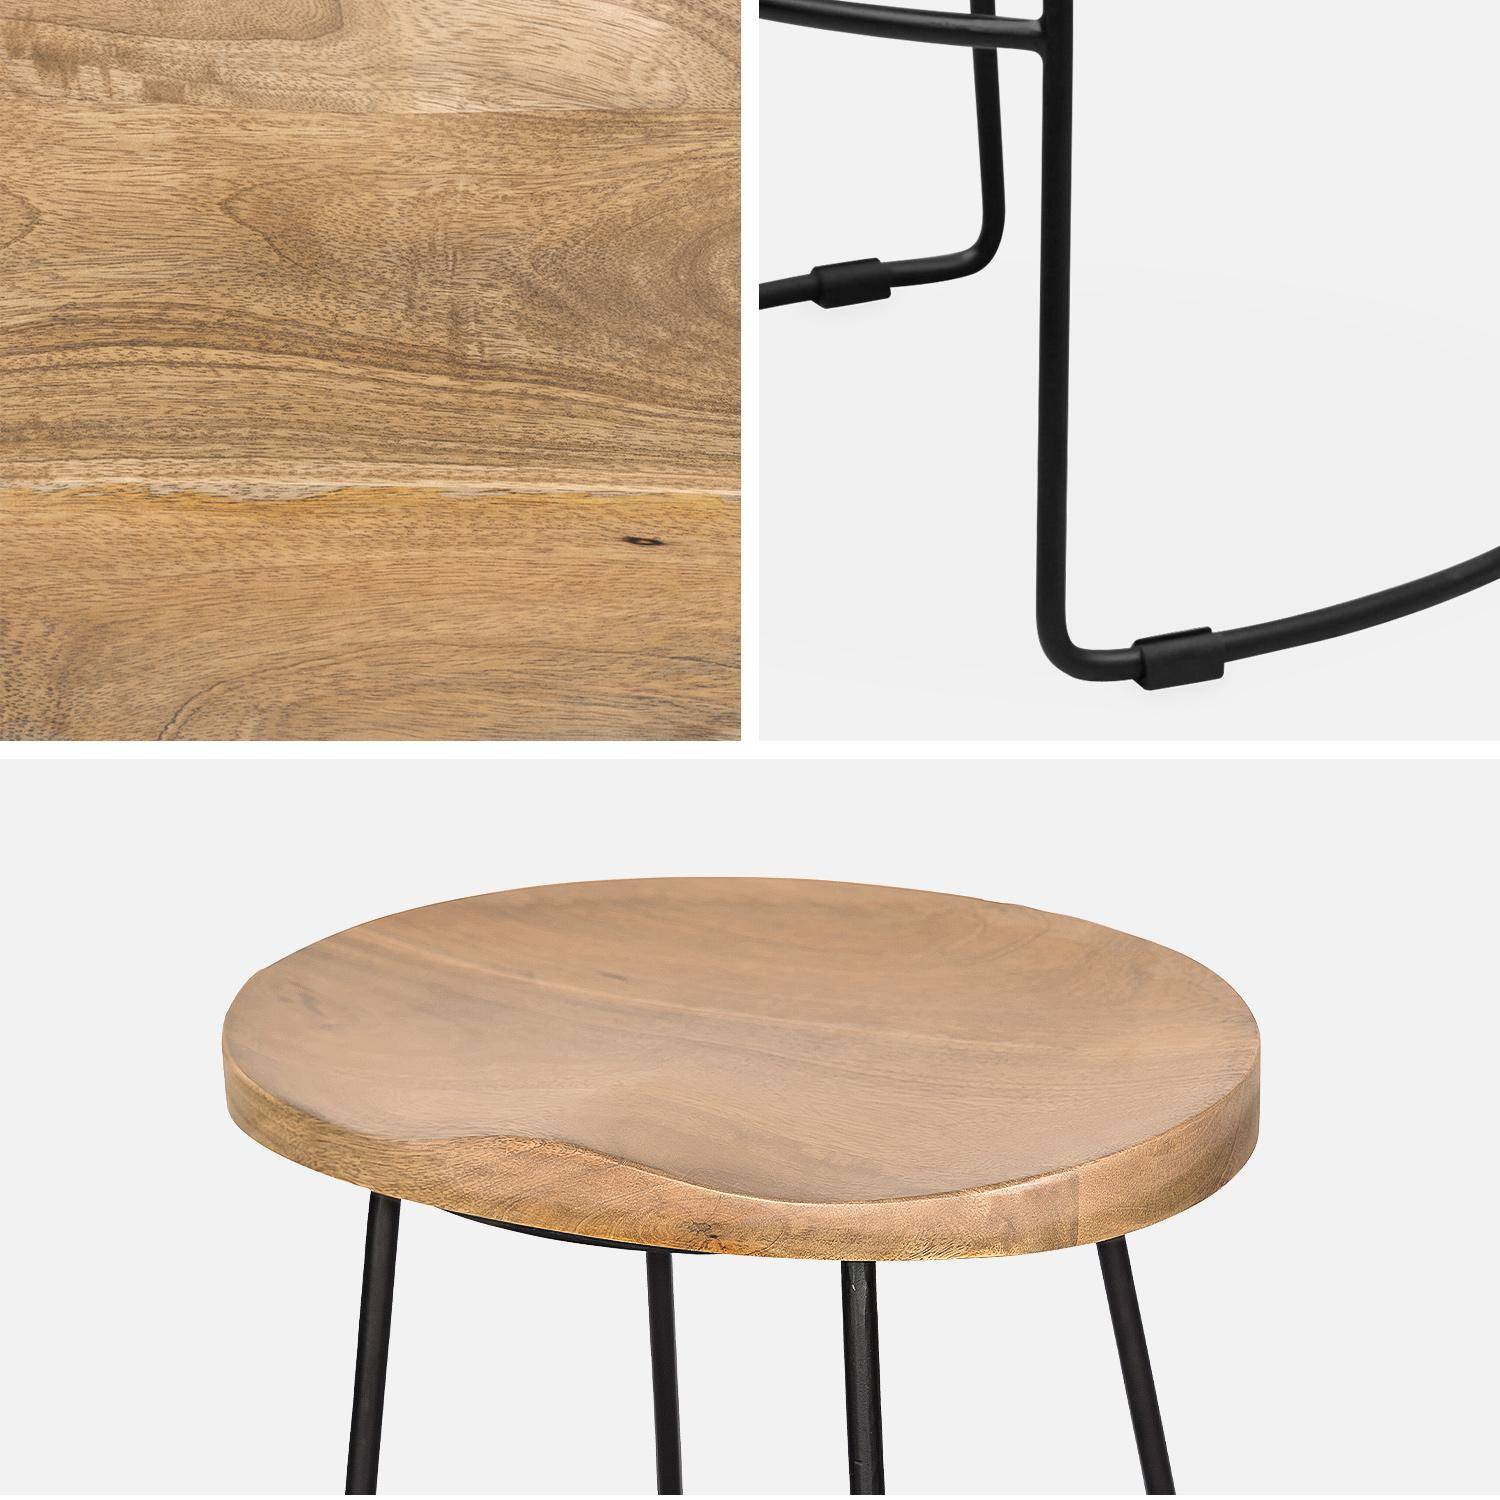 Set of 4 industrial metal and wooden bar stools, 44x36x65cm, Jaya, Mango wood seat, black metal legs Photo7